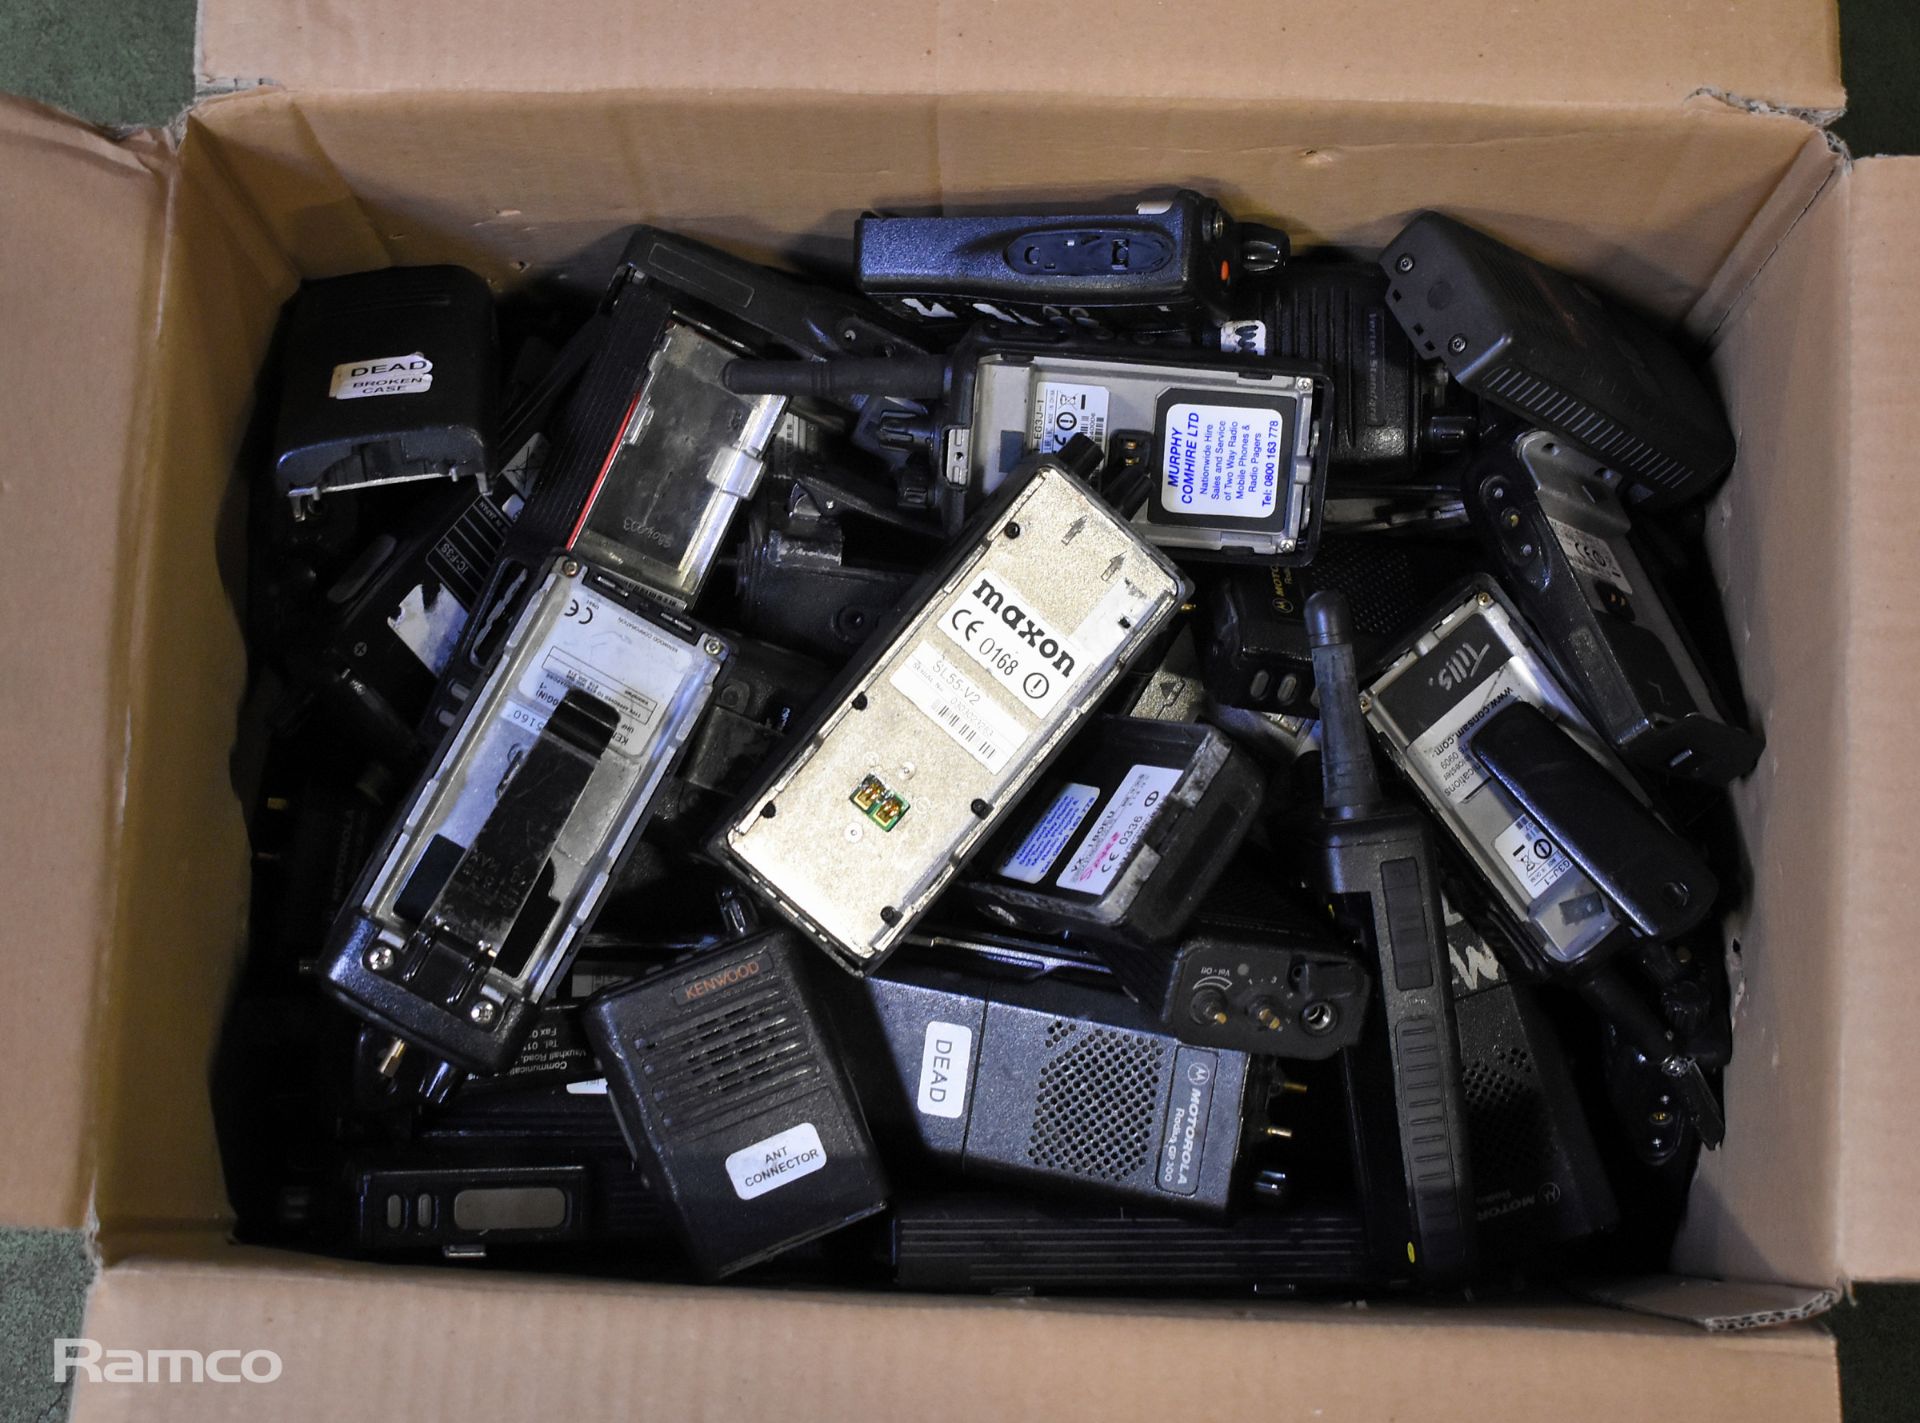 Approx 57x assorted two way radios - 19x Motorola GP900, 19x GP300, 10x Vertex, 1x Icom, 1x Maxon